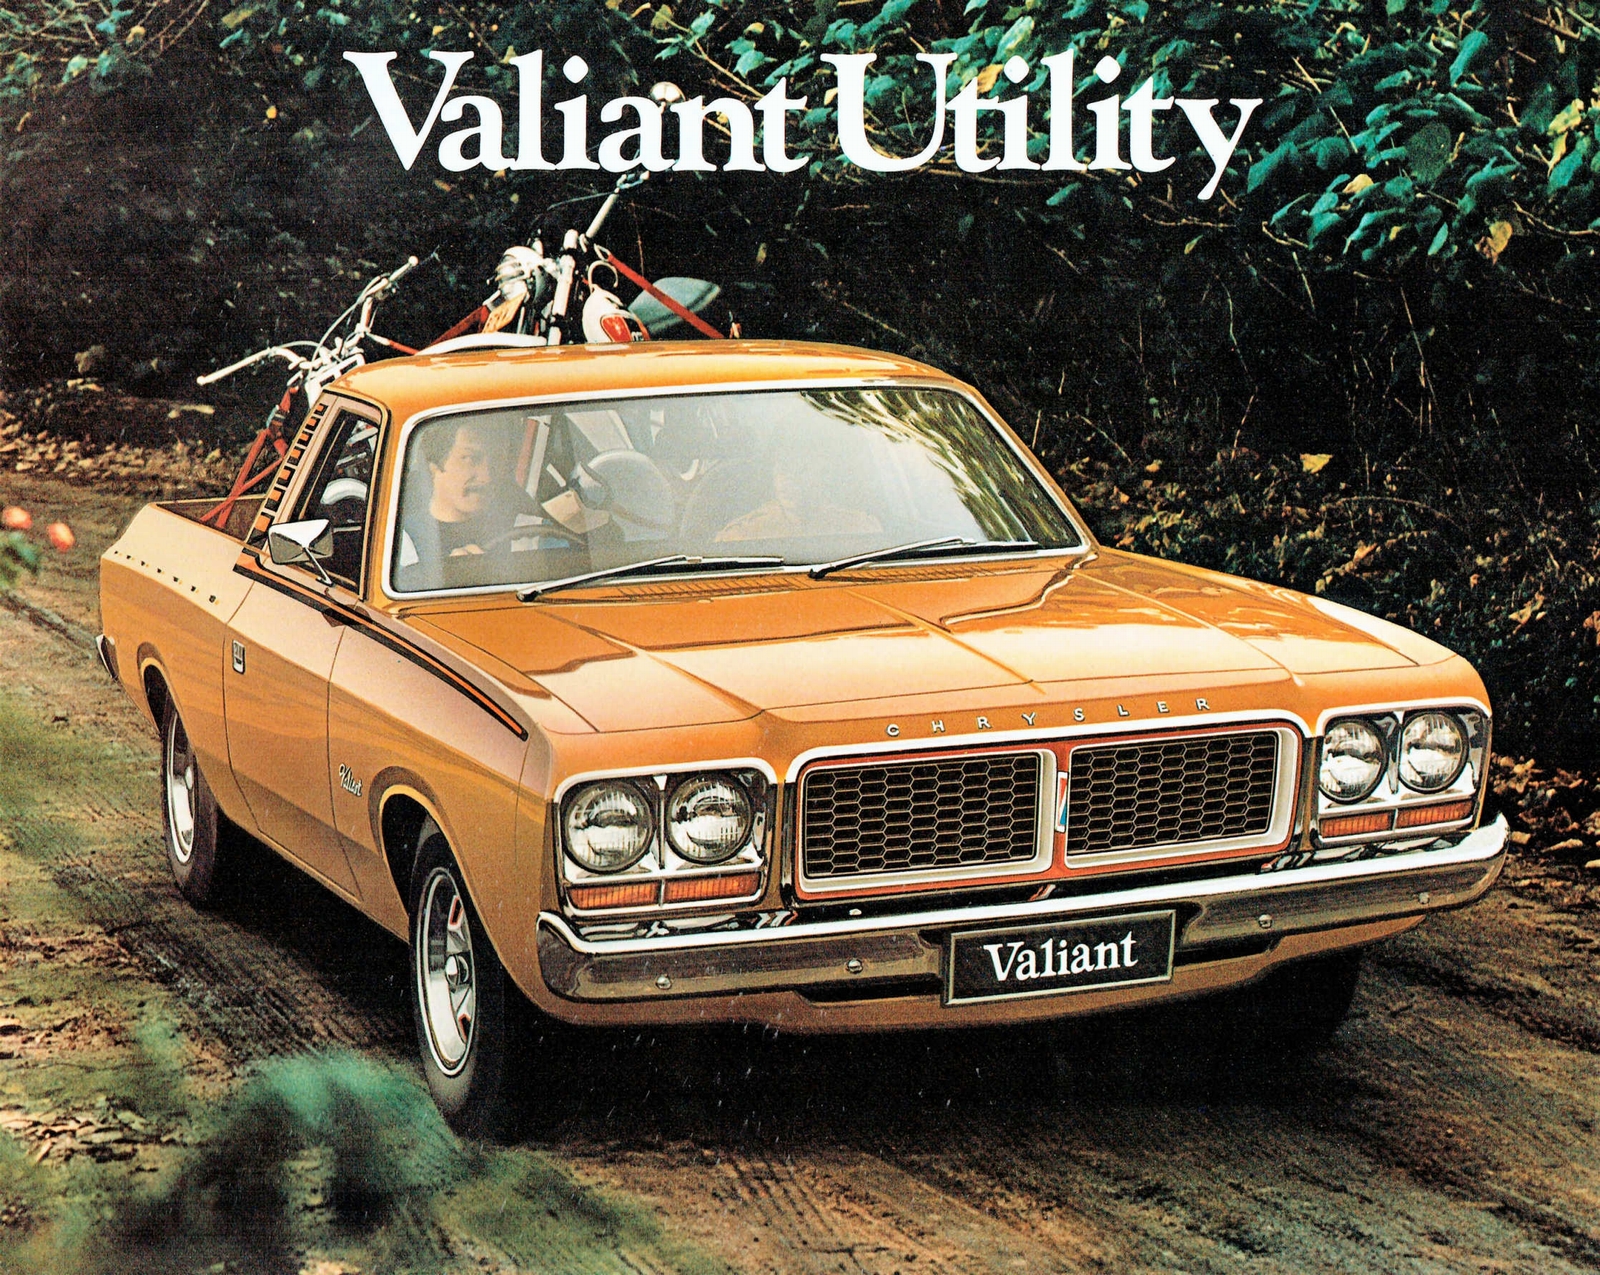 n_1976 Valiant CL Utility-01.jpg